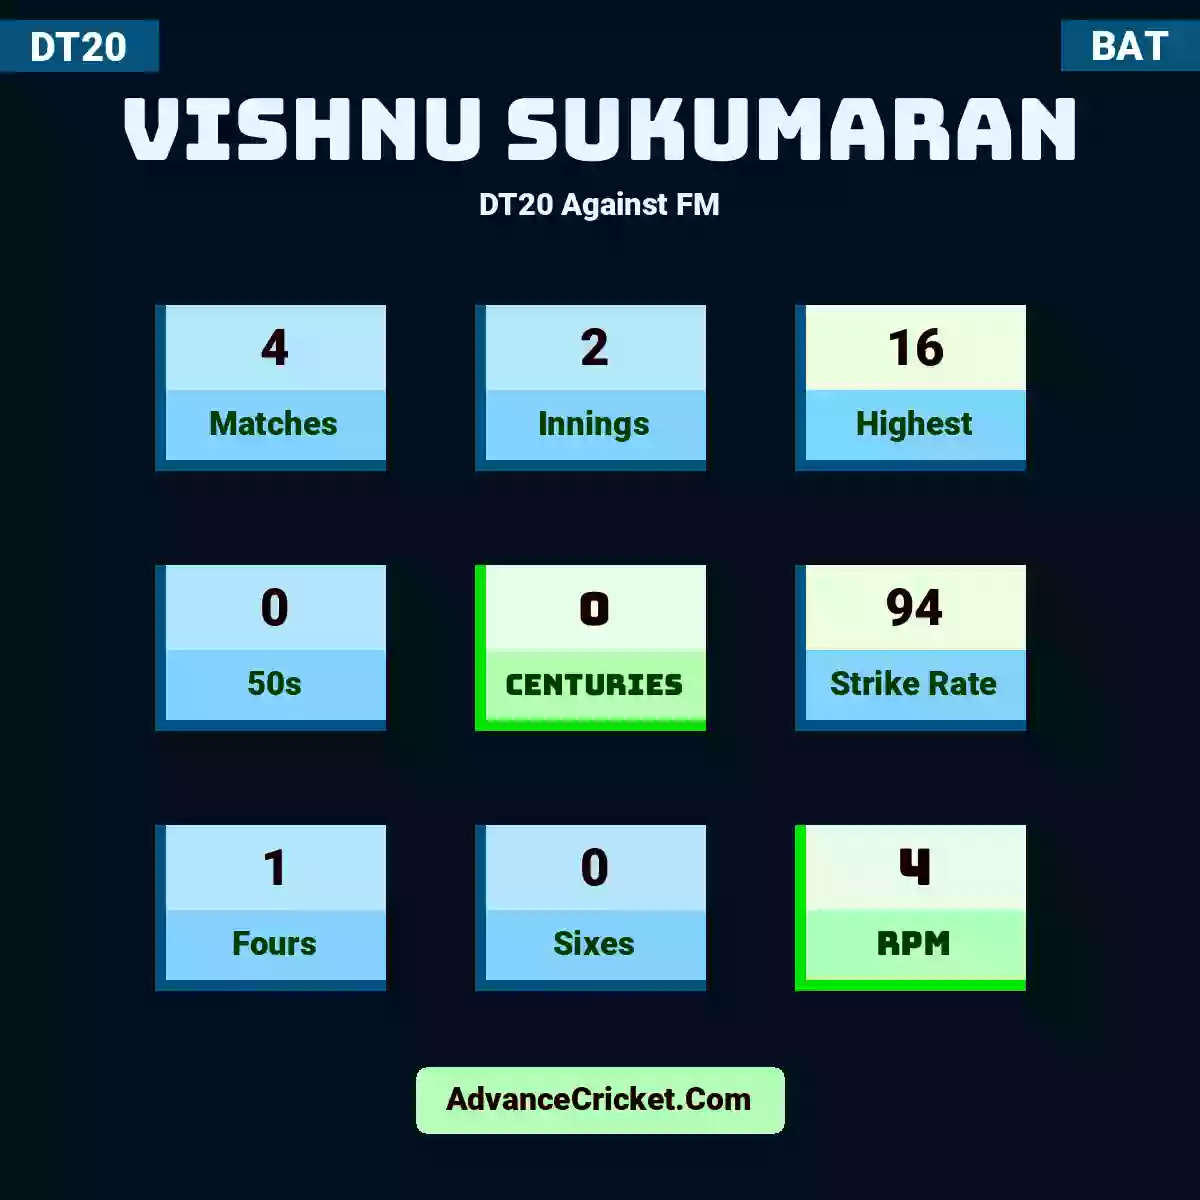 Vishnu Sukumaran DT20  Against FM, Vishnu Sukumaran played 4 matches, scored 16 runs as highest, 0 half-centuries, and 0 centuries, with a strike rate of 94. V.Sukumaran hit 1 fours and 0 sixes, with an RPM of 4.